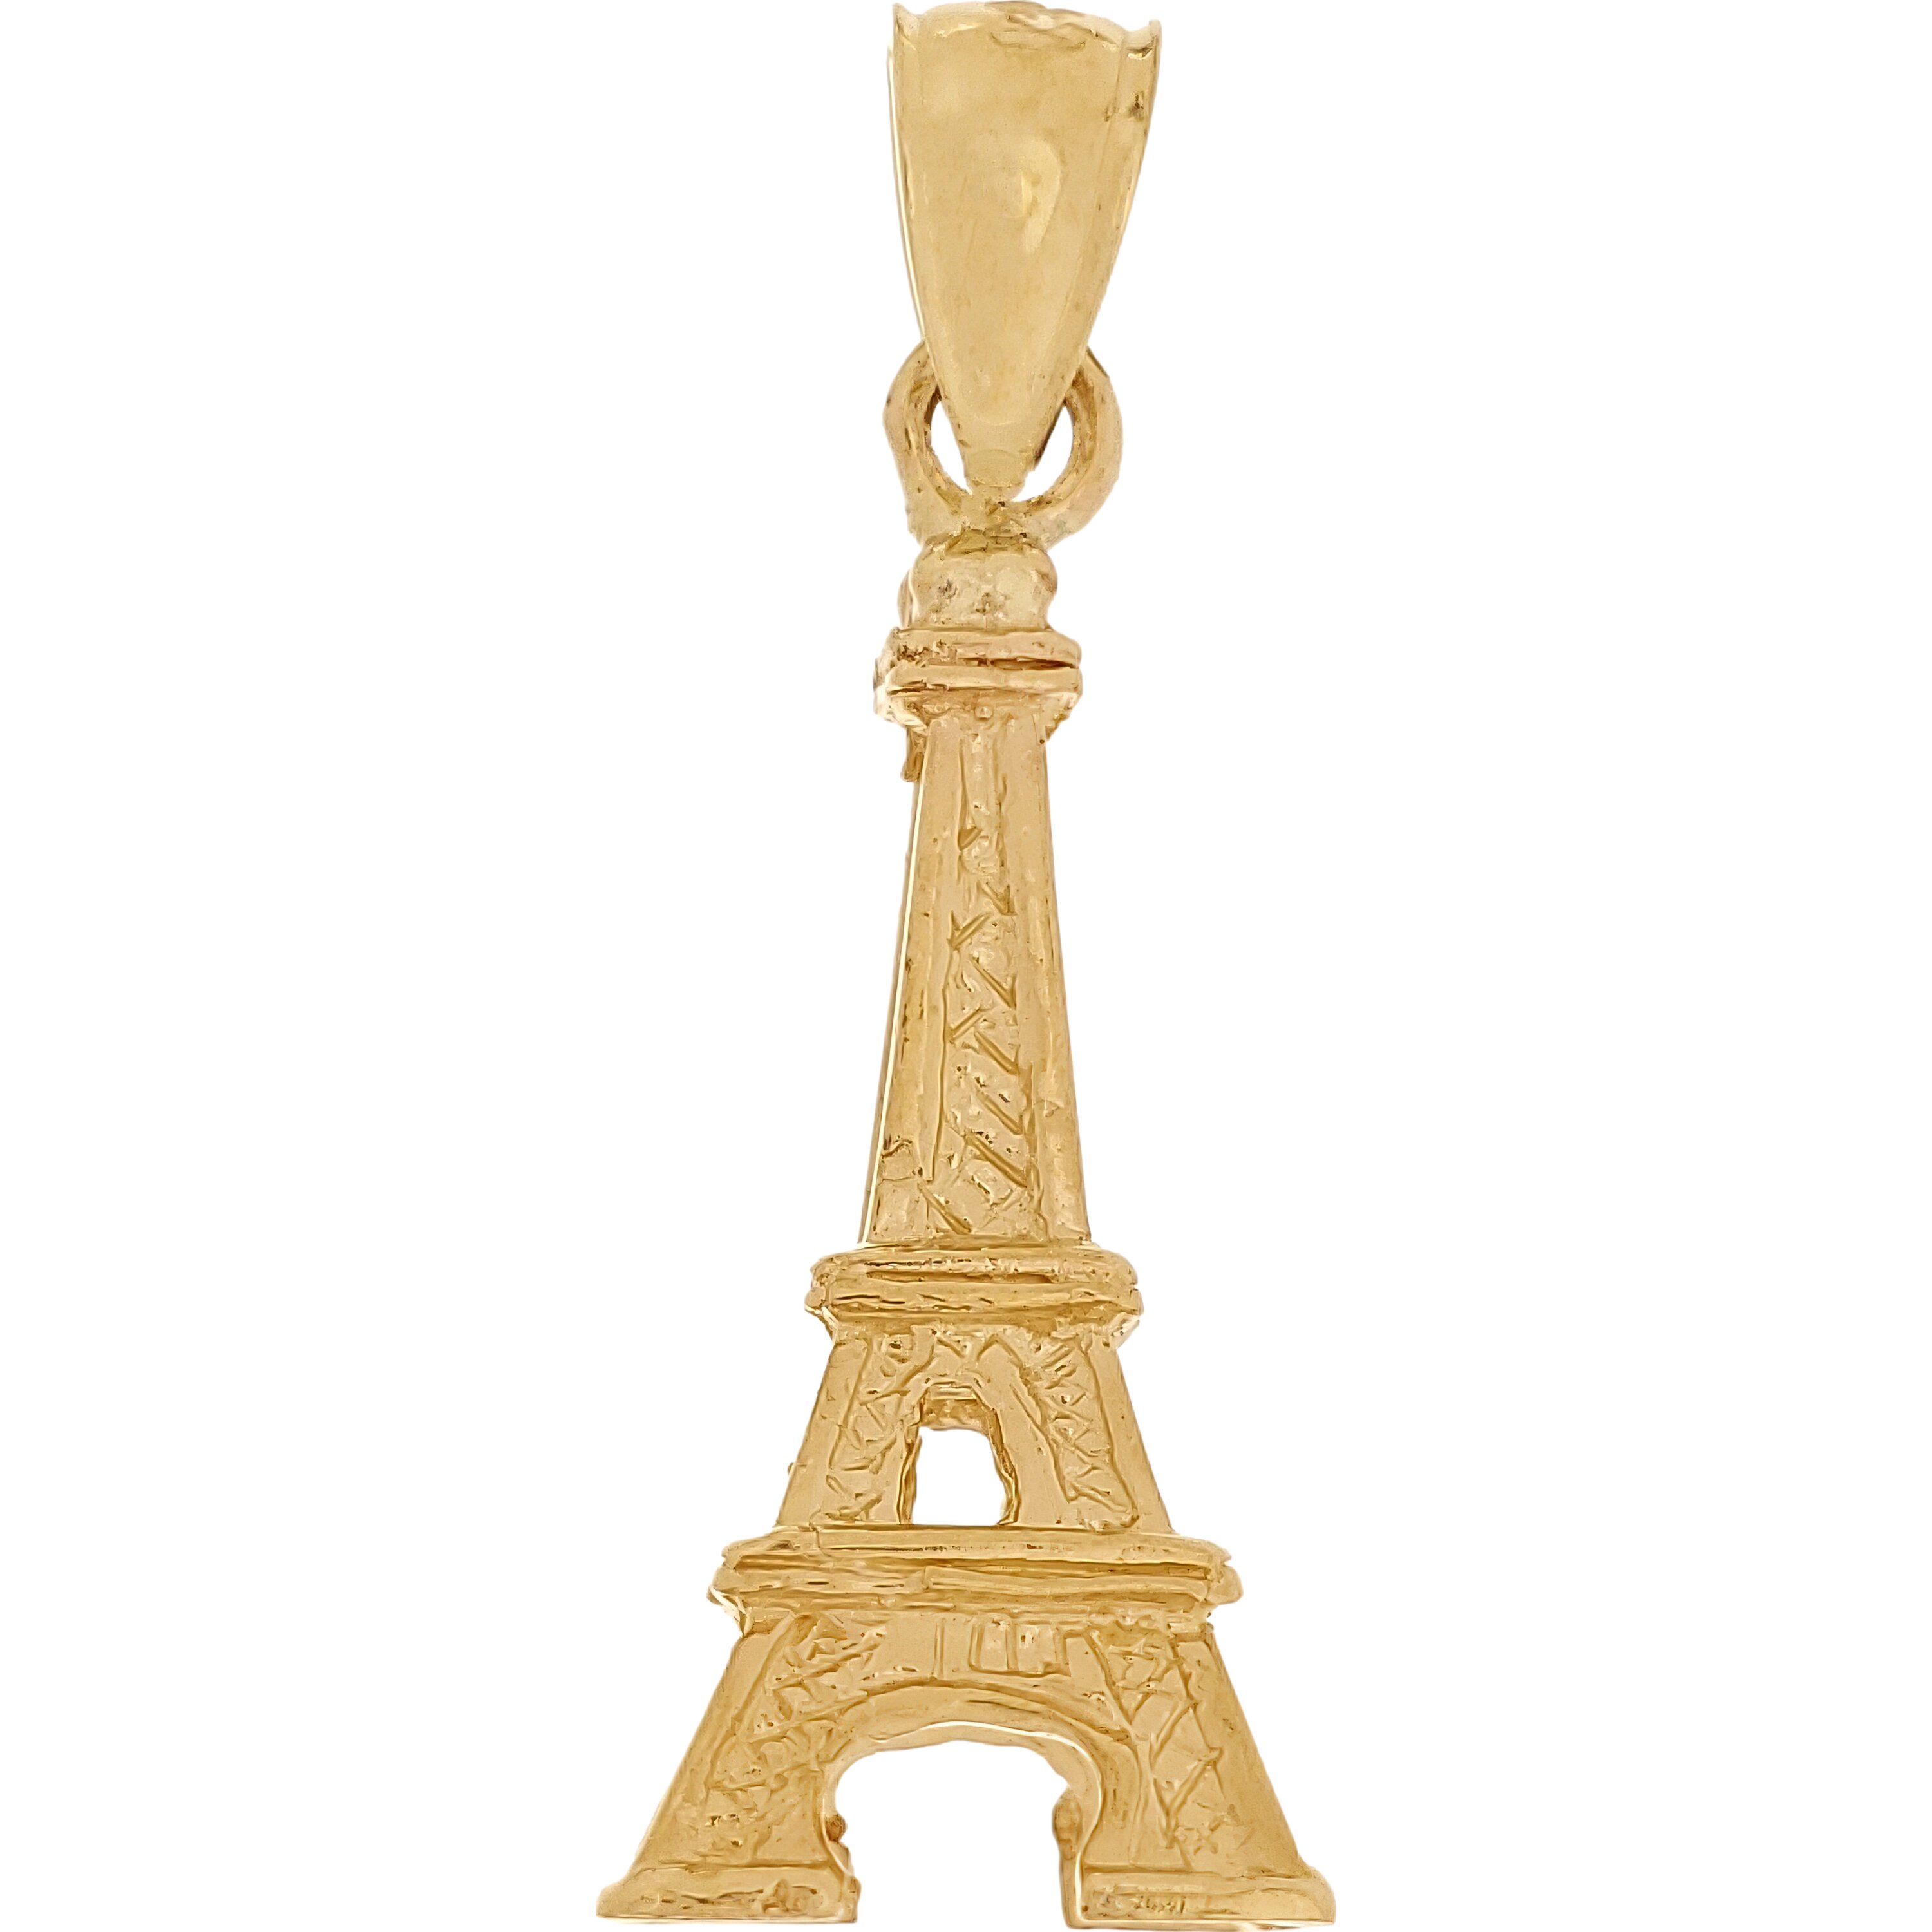 Findingking 14K Gold Eiffel Tower Charm 21mm